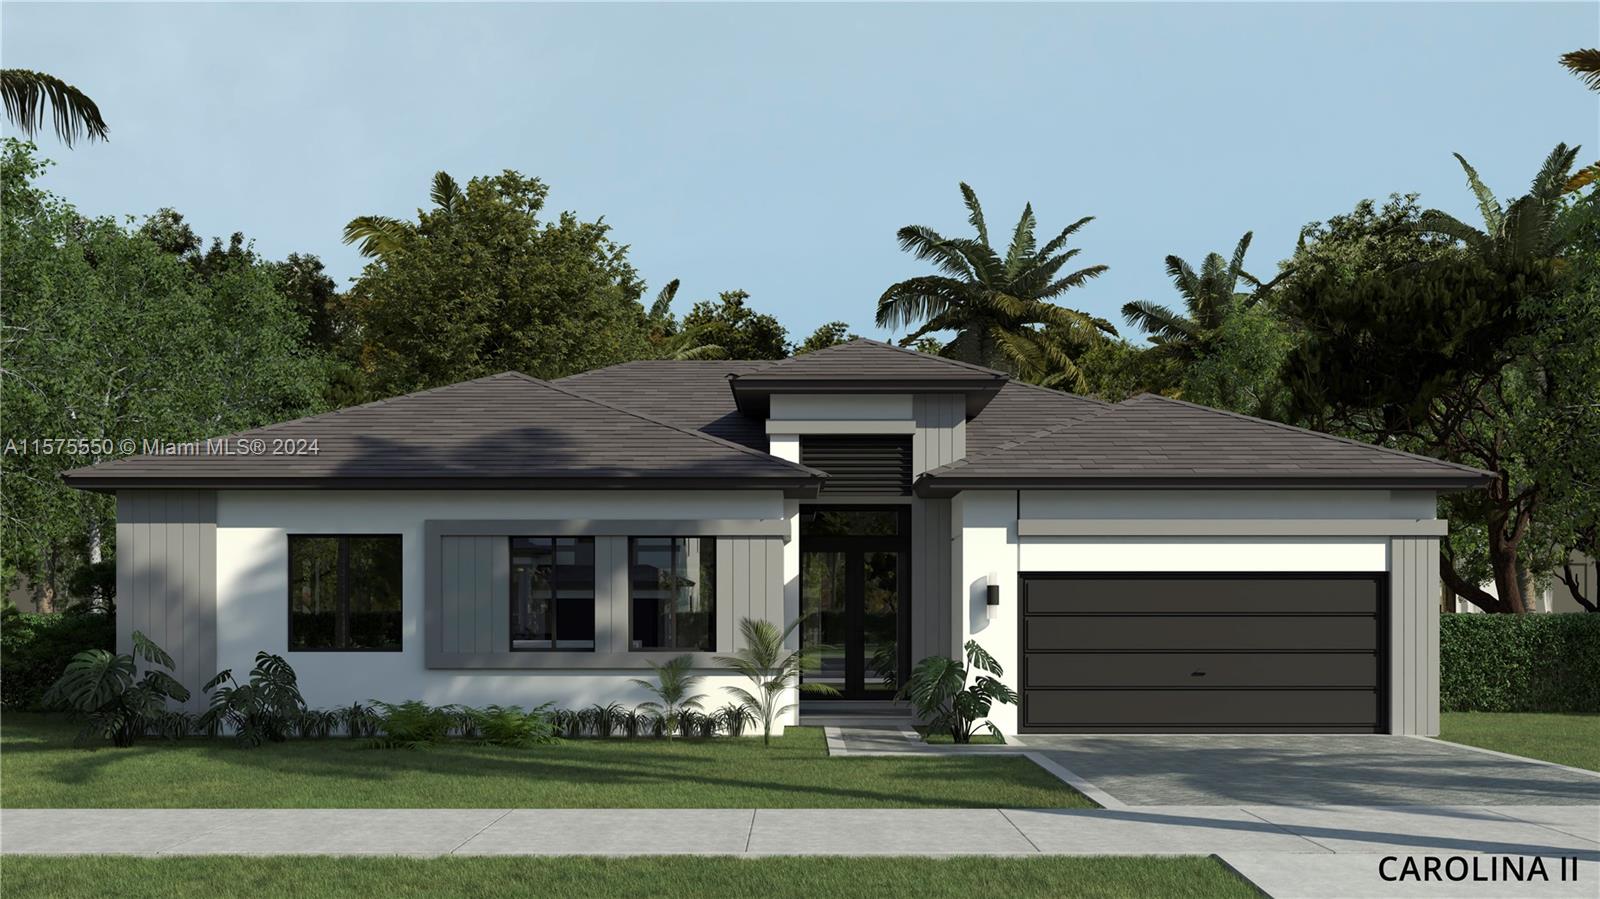 Property for Sale at 97 Sw Montego Bay Drive, Cutler Bay, Miami-Dade County, Florida - Bedrooms: 4 
Bathrooms: 4  - $820,990